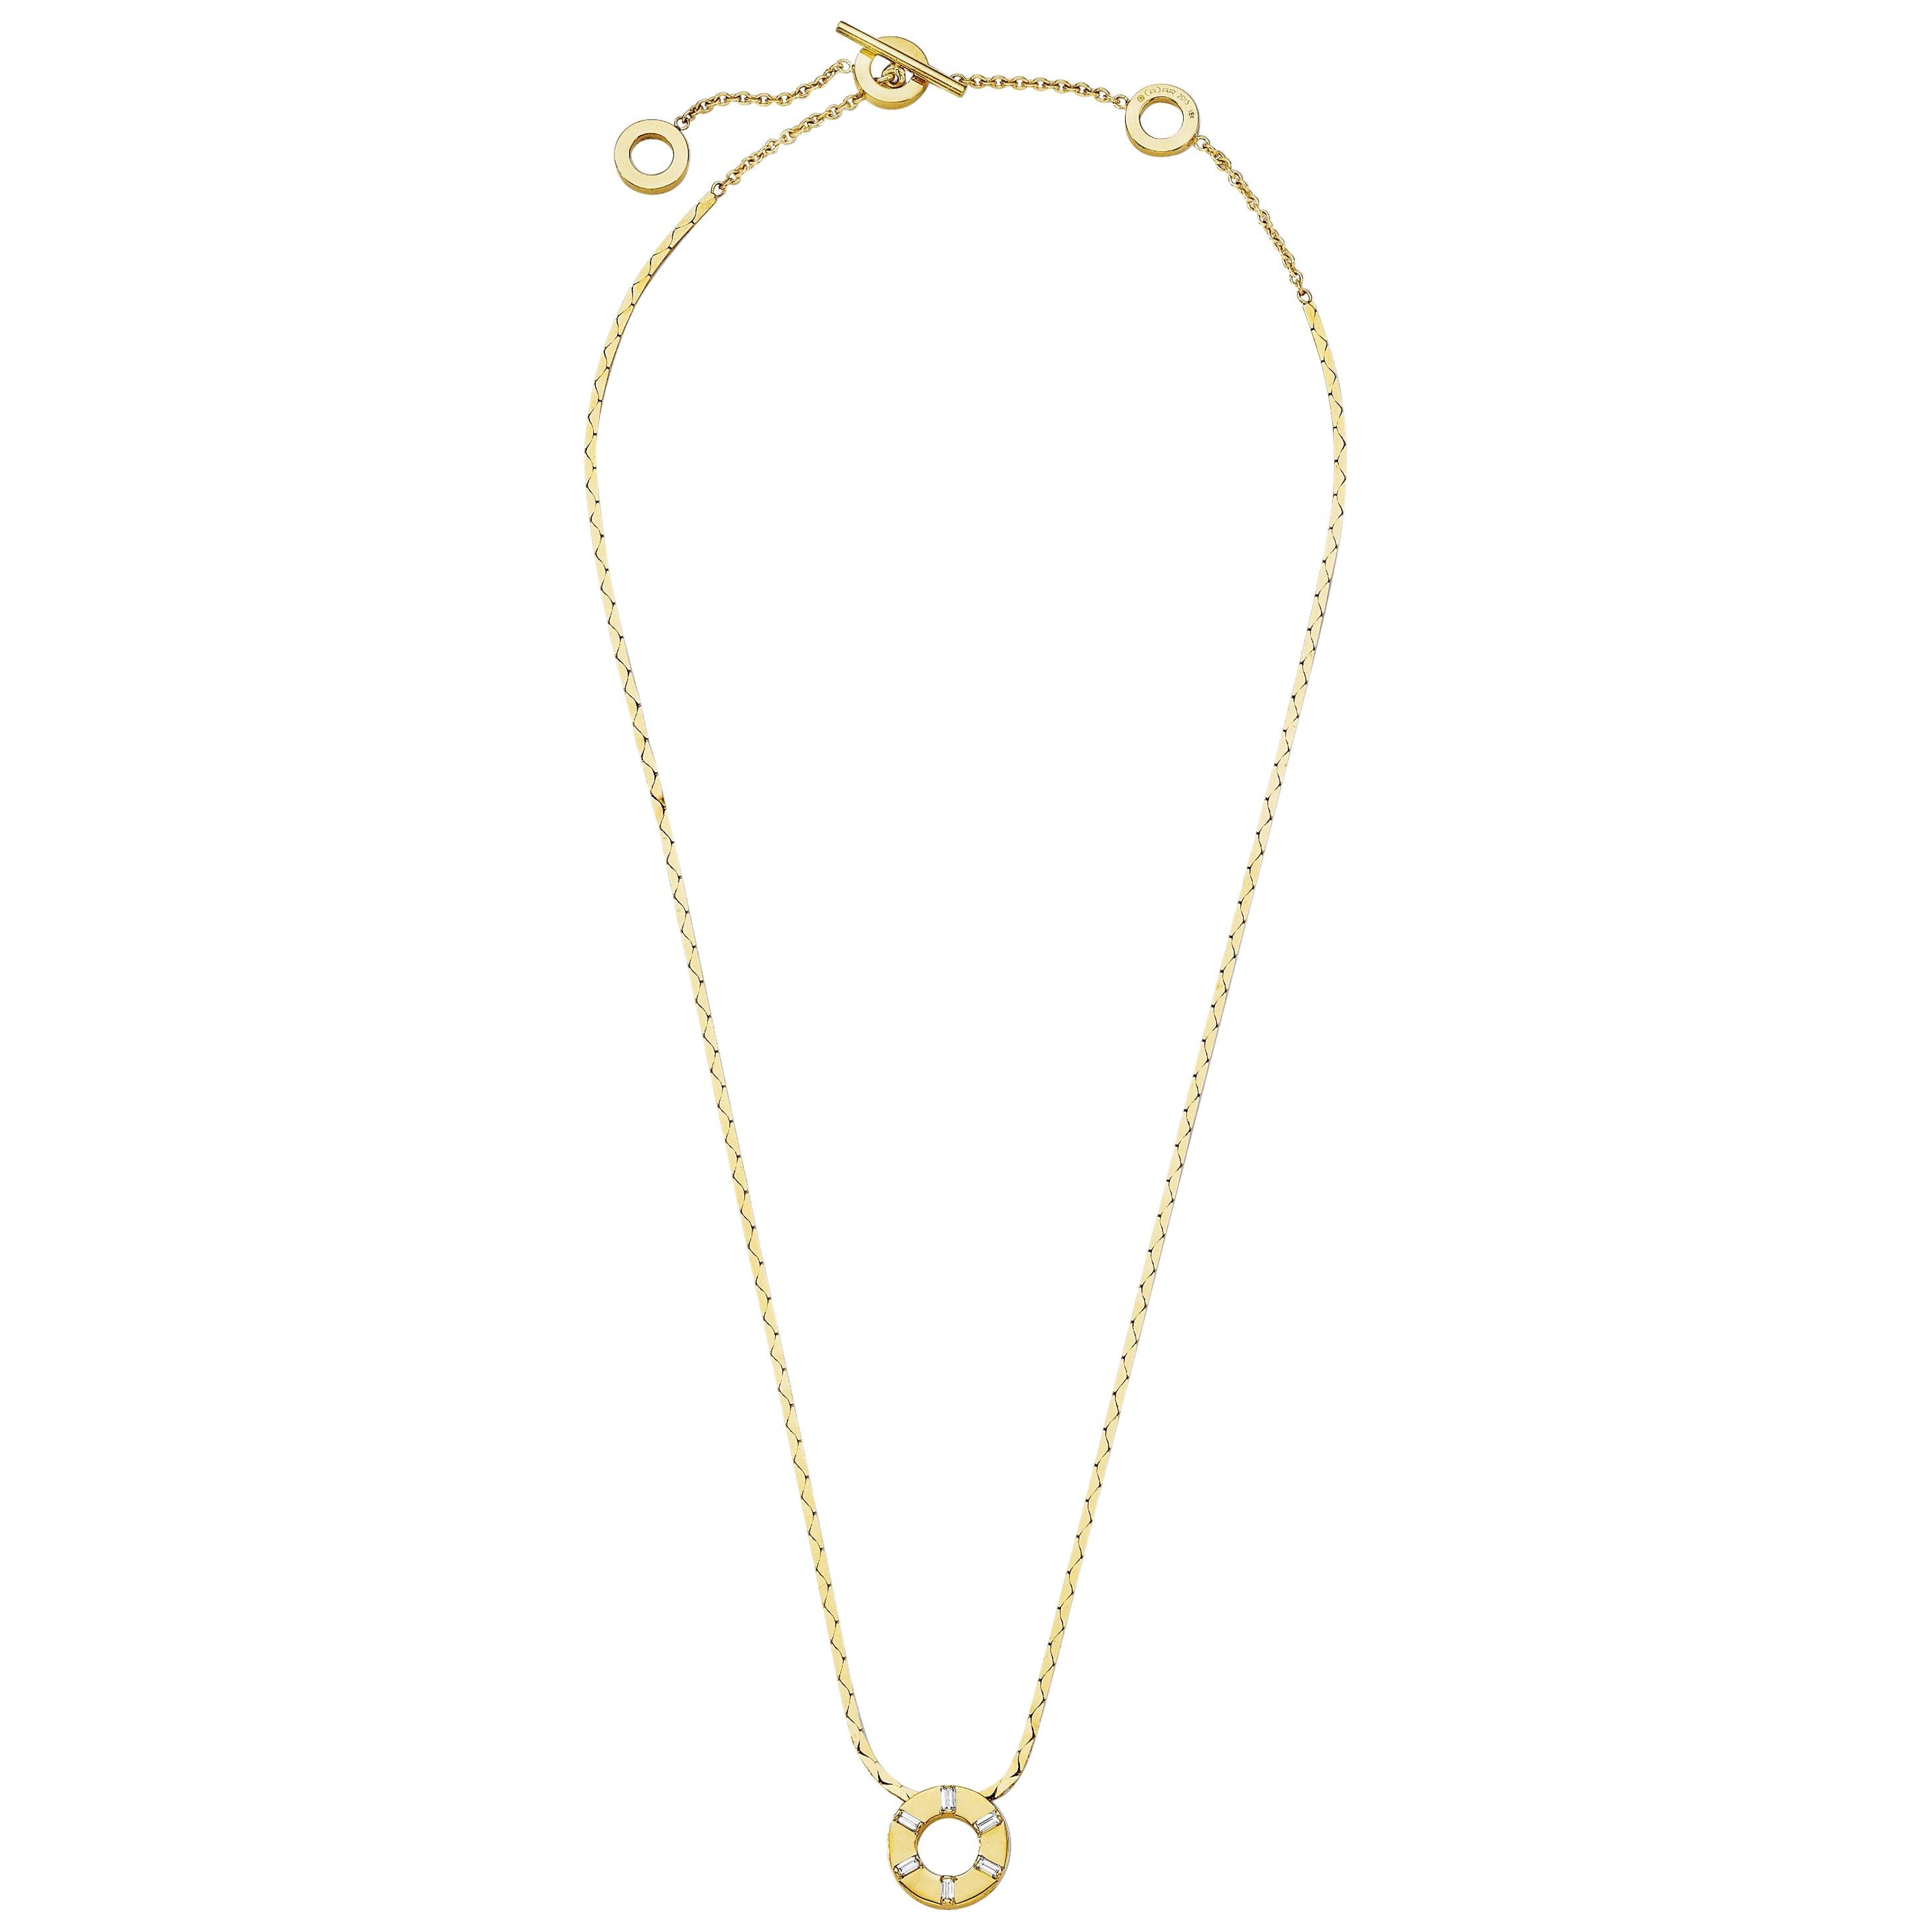 CADAR Prime Pendant Necklace, 18K Yellow Gold and White Diamonds